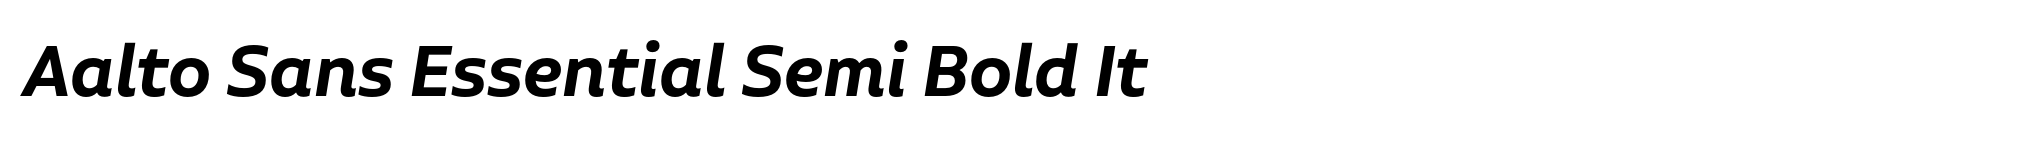 Aalto Sans Essential Semi Bold It image